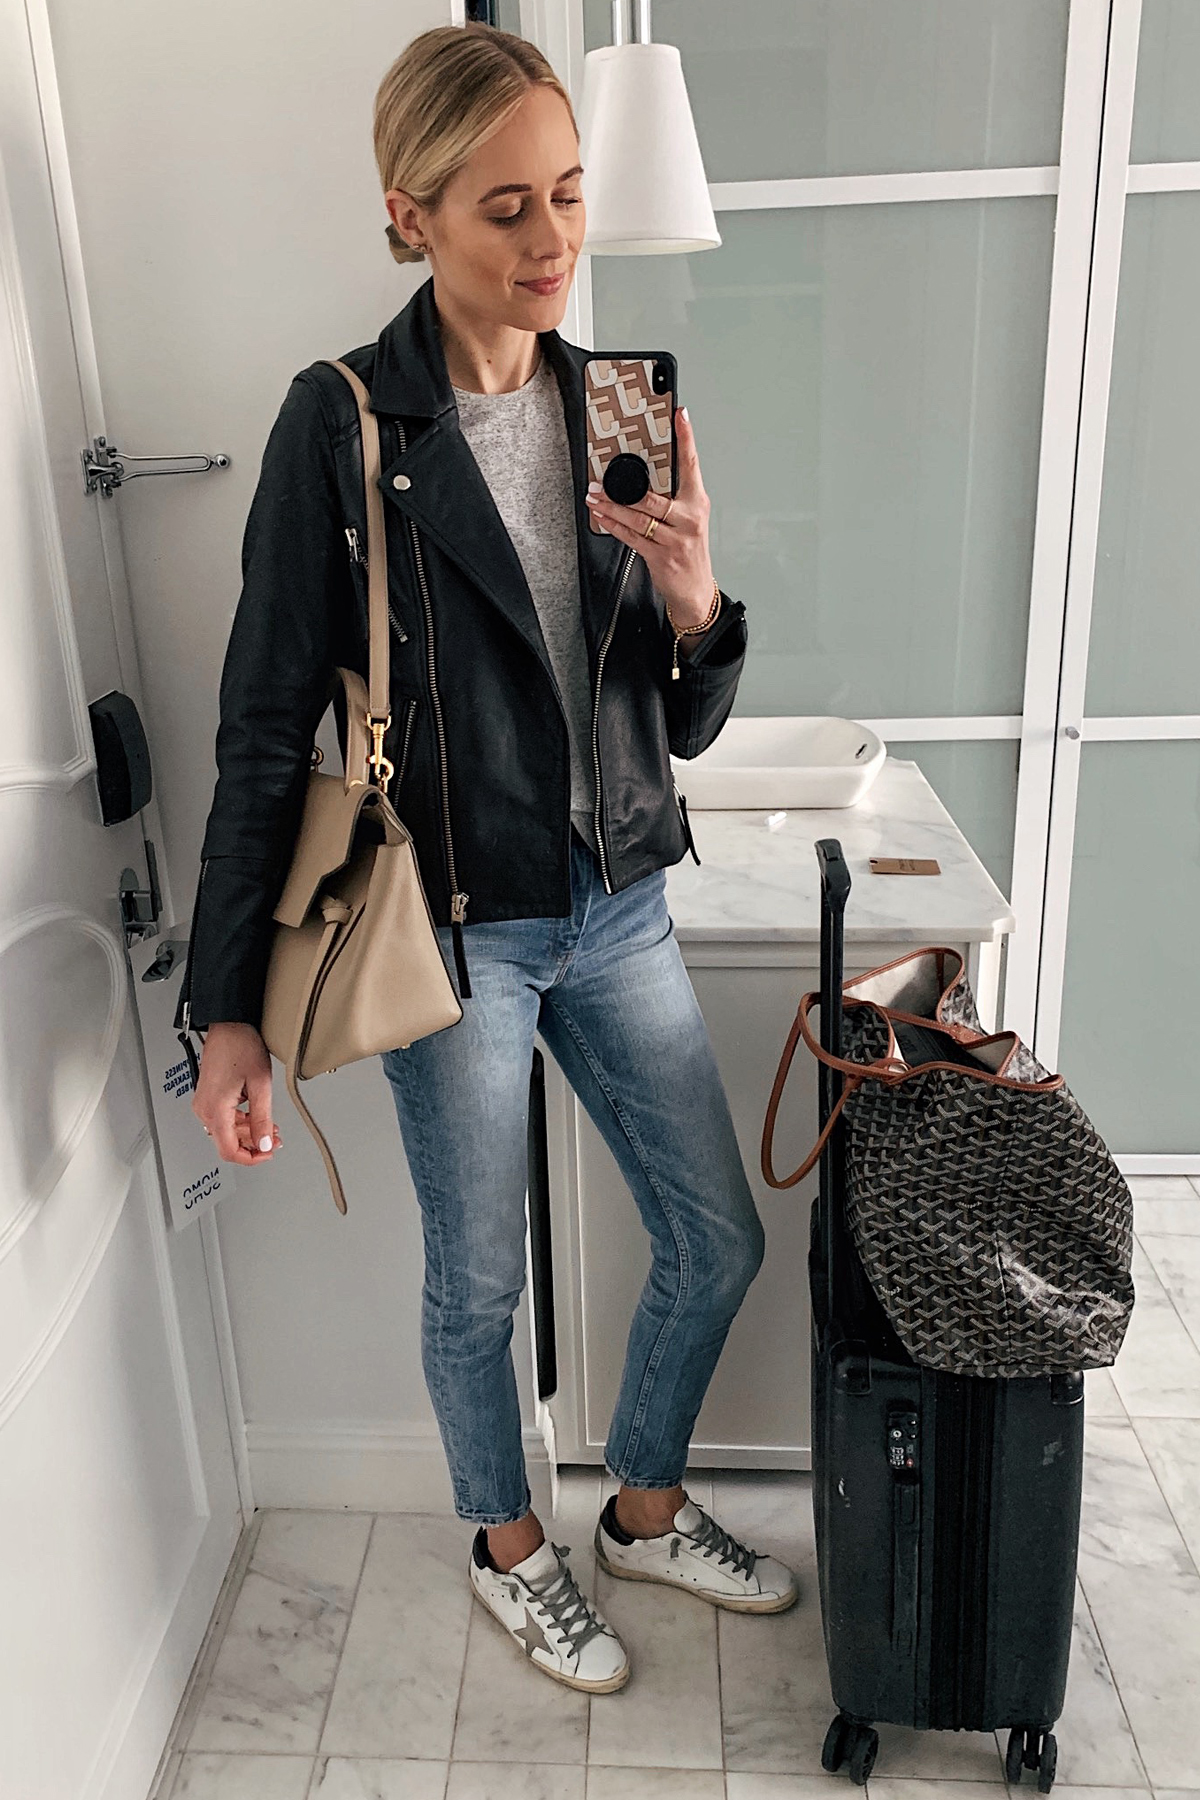 Fashion Jackson Wearing Black Leather Jacket Grey Tshirt Denim Skinny Jeans Goyard Tote Calpack Luggage Airport Outfit